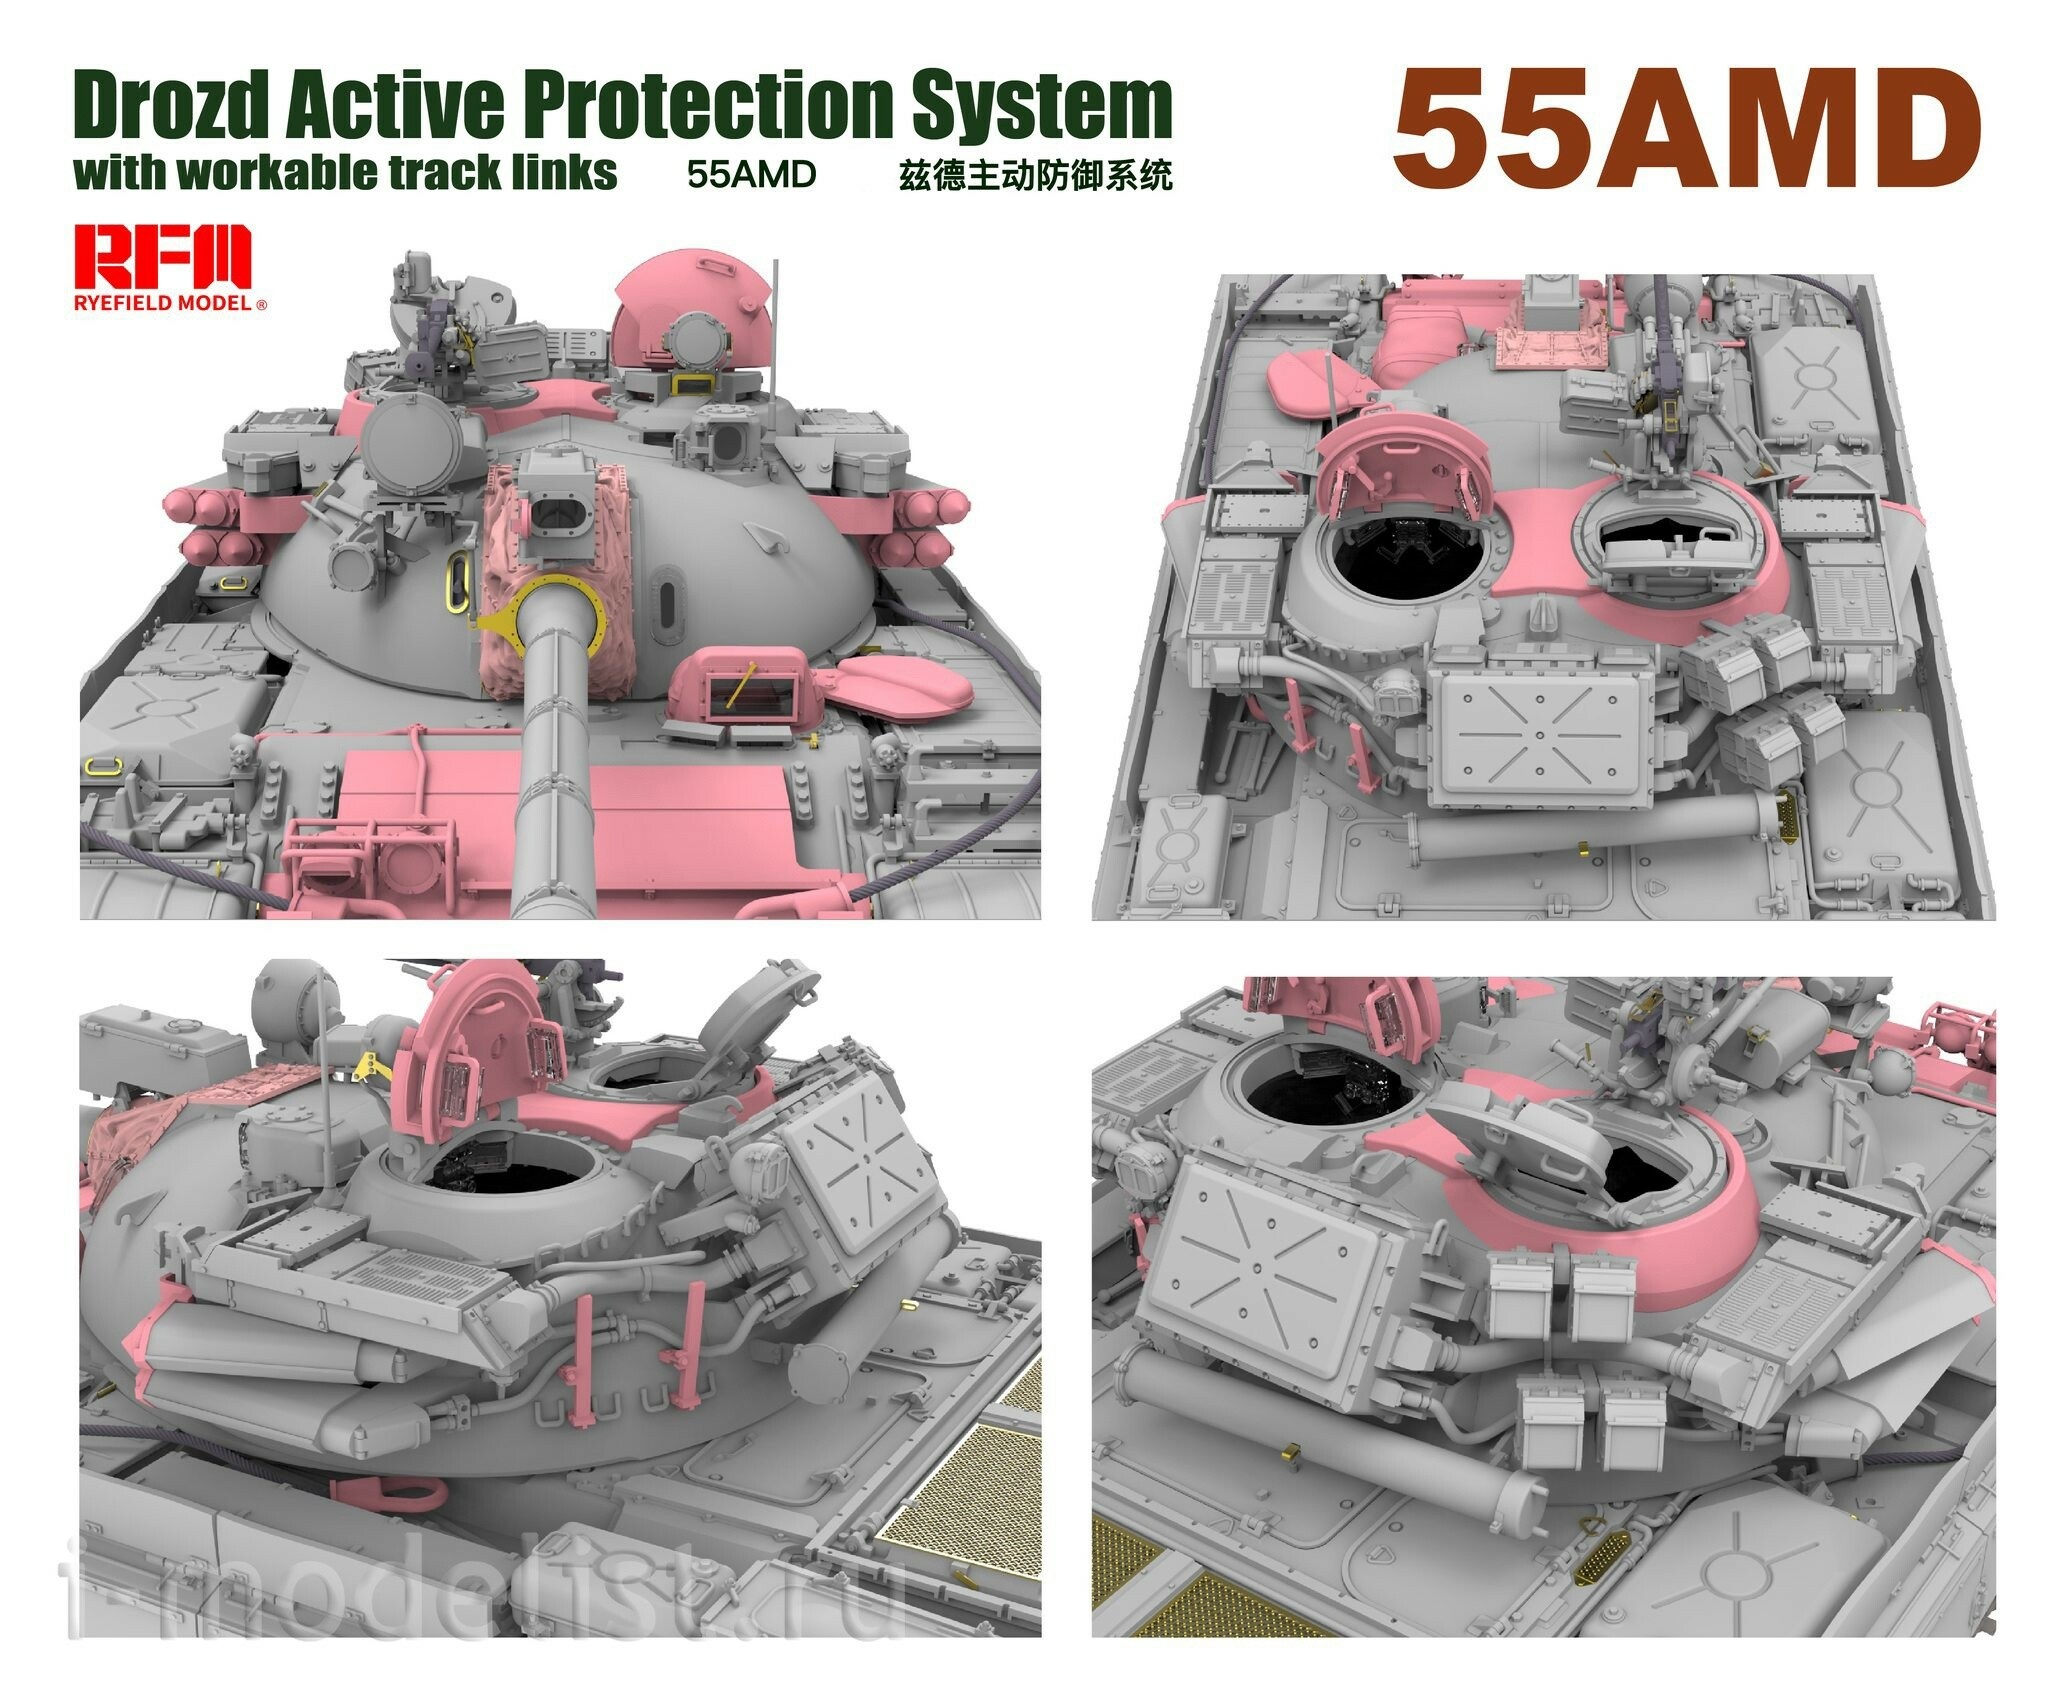 RM-5091 Rye Field Model 1/35 Советский танк тип 55АД с активным комплексом КАЗ Drozd